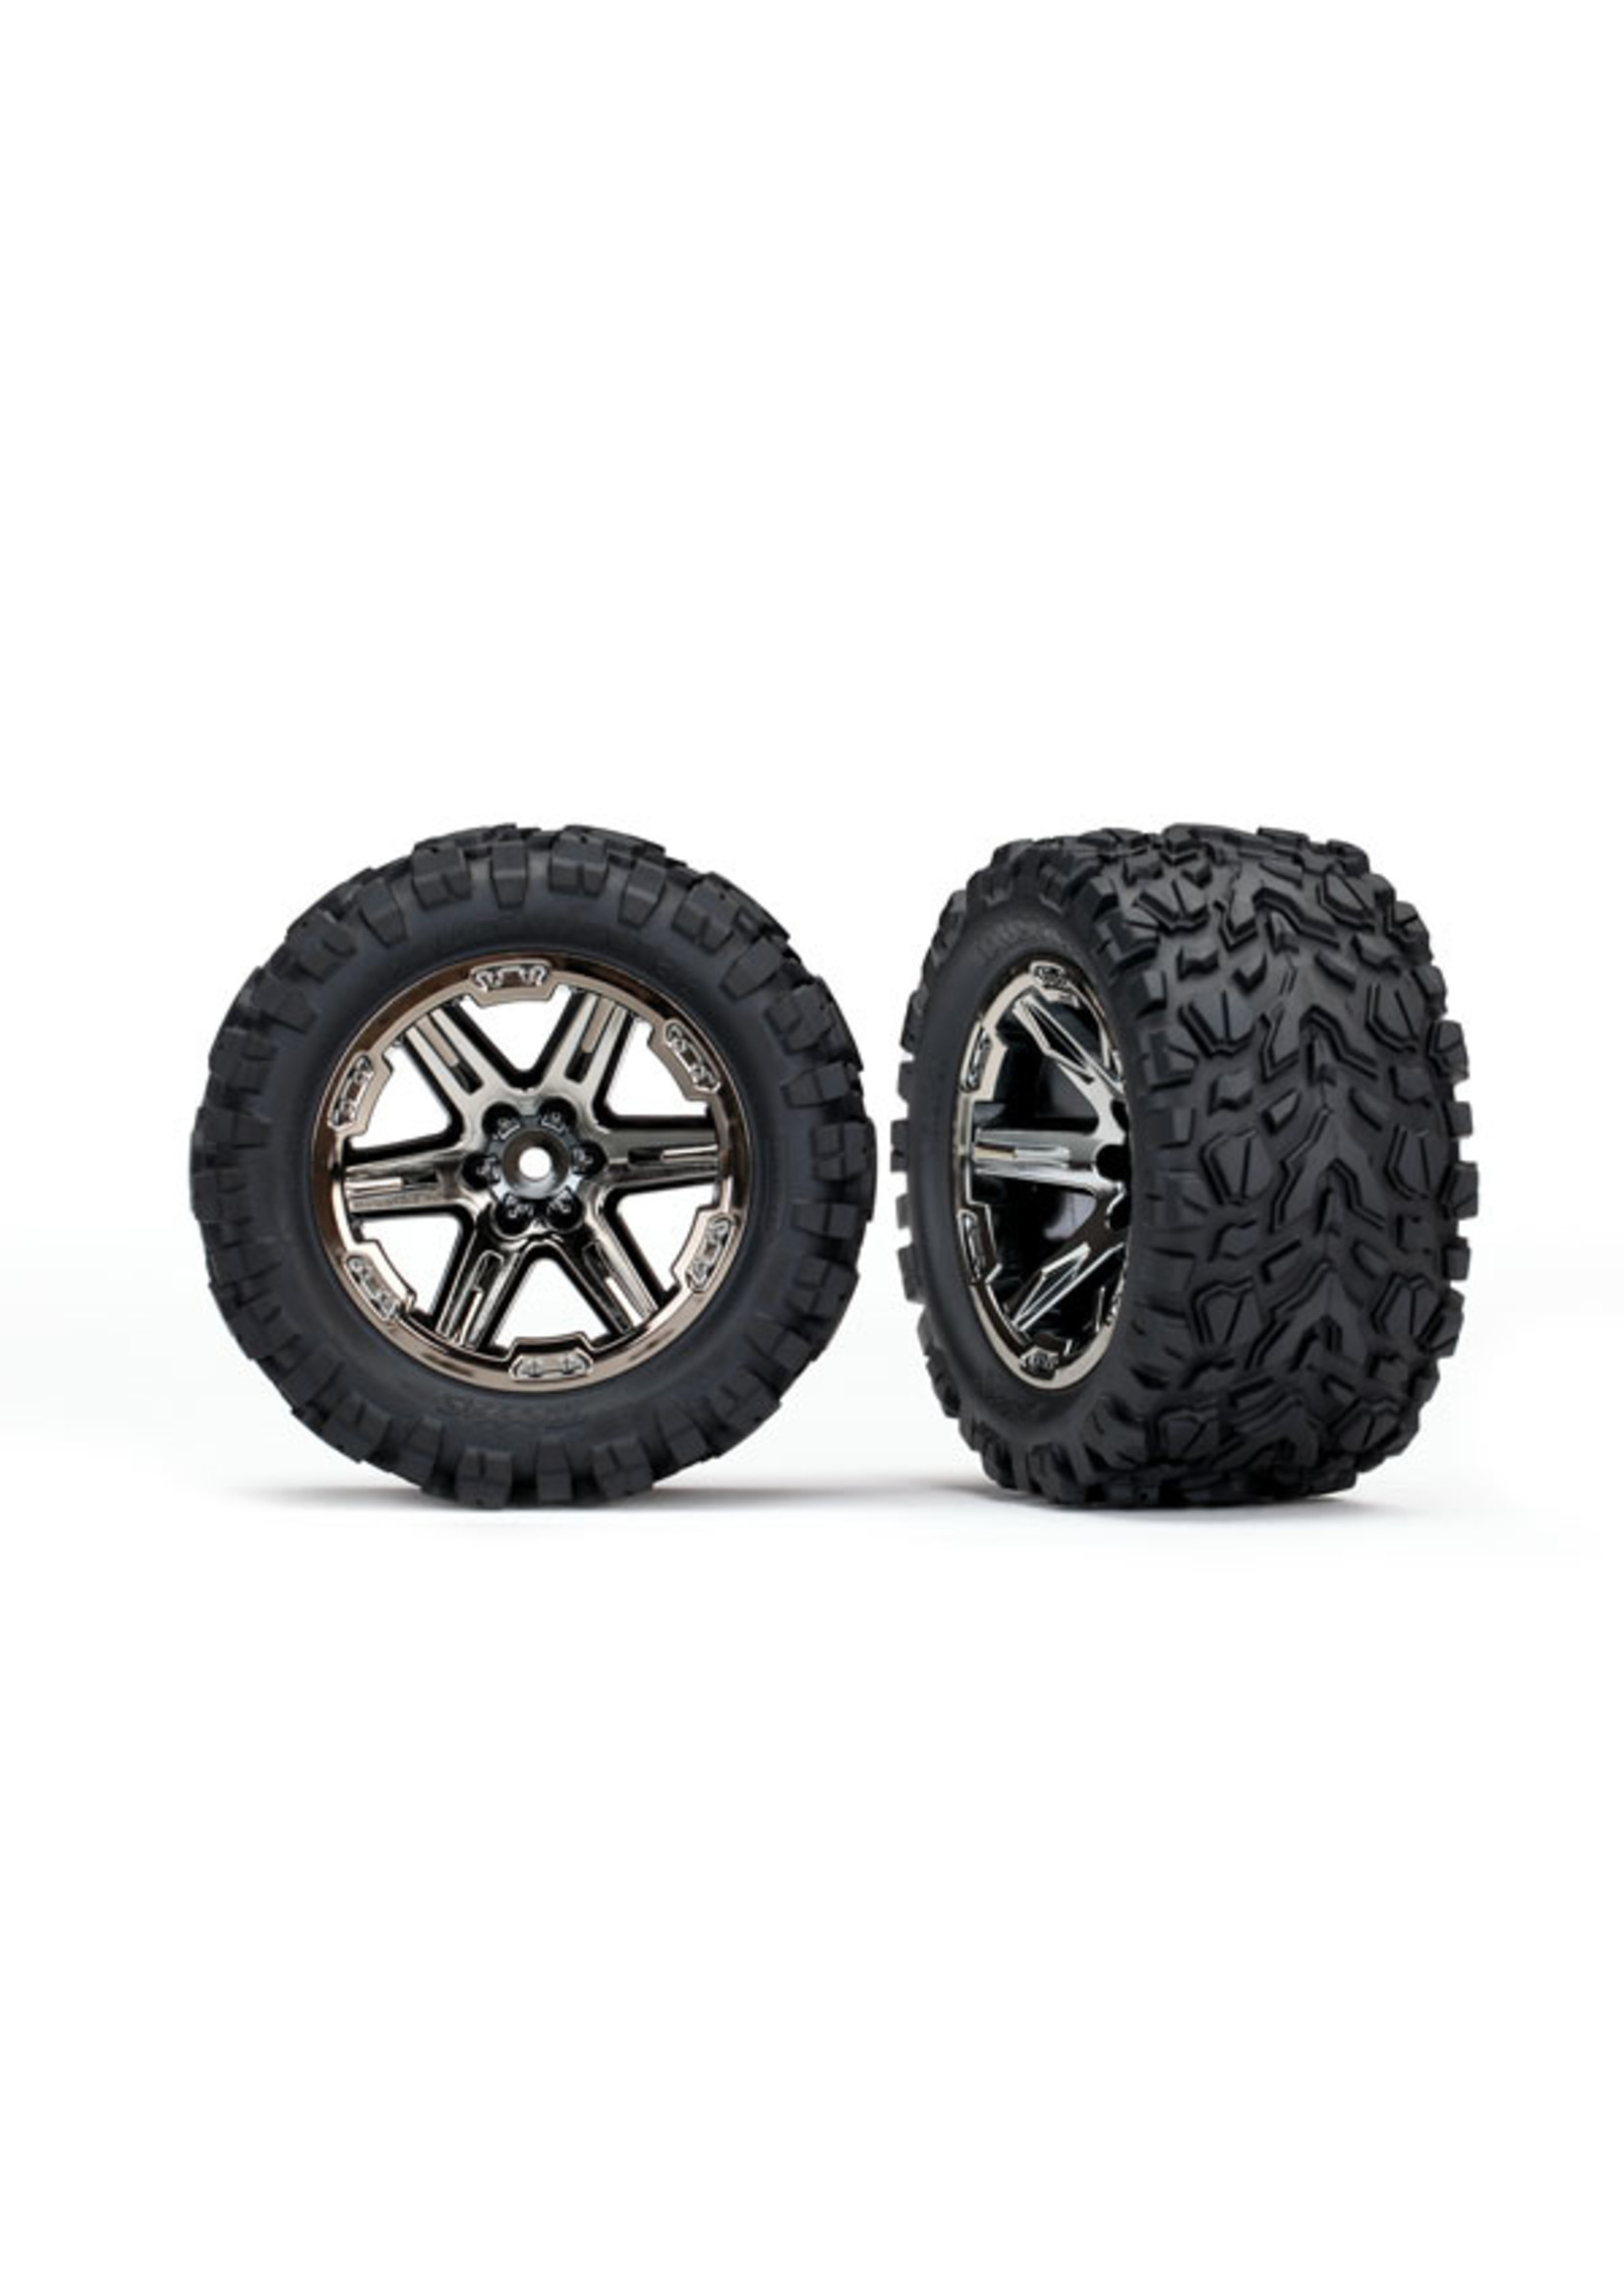 Traxxas 6774X - RXT Black Chrome Wheels / Talon Extreme Tires - 2WD Electric Rear